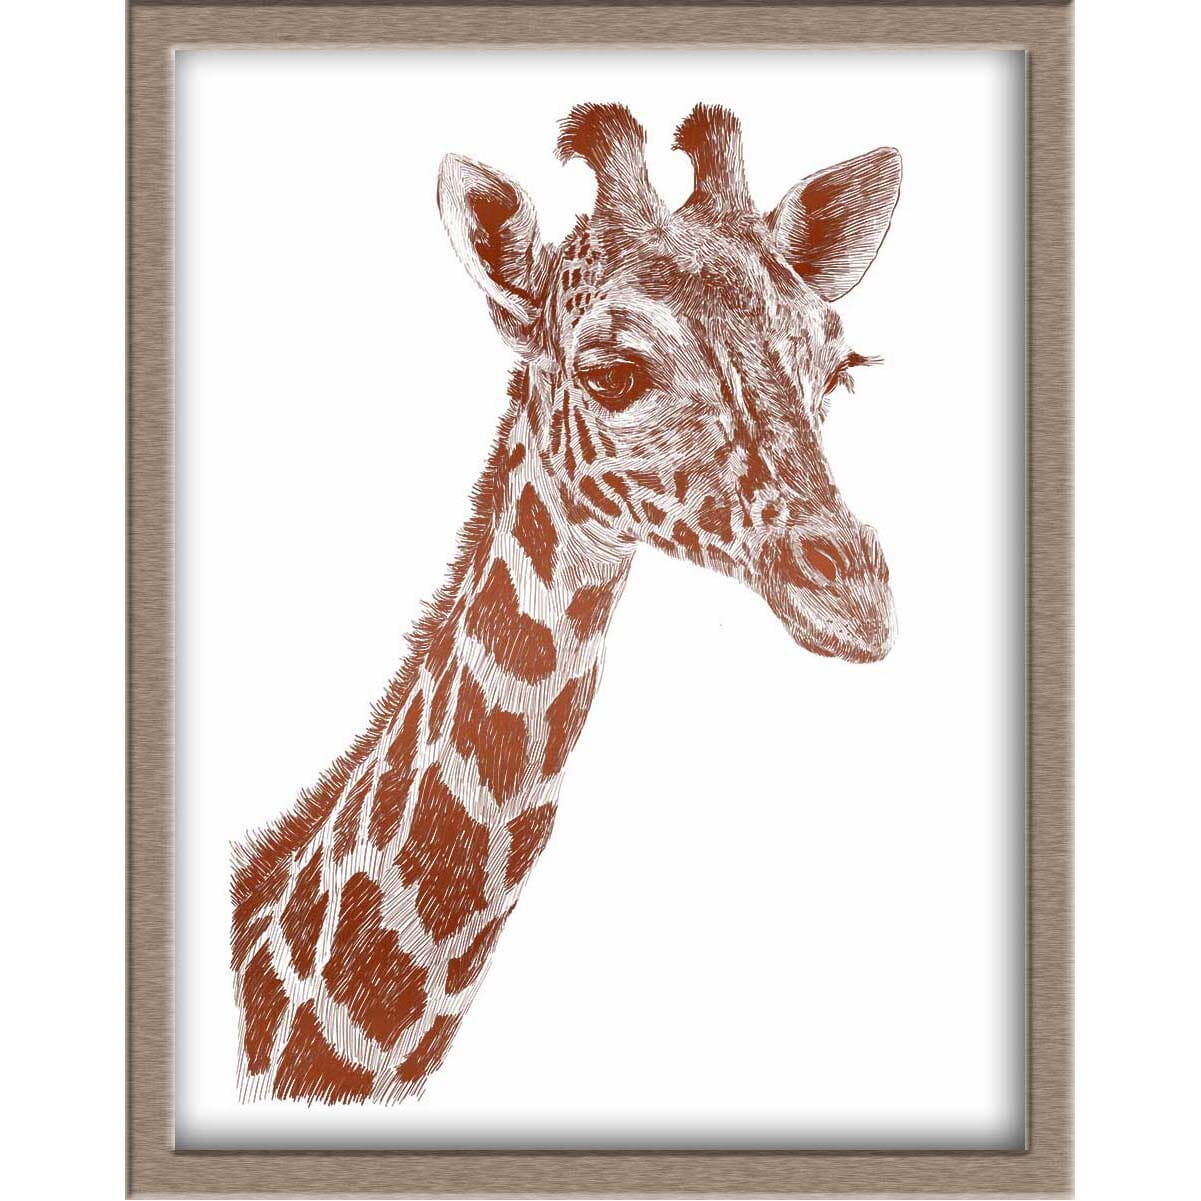 Giraffe Foiled Print Posters, Prints, & Visual Artwork JoyousJoyfulJoyness 